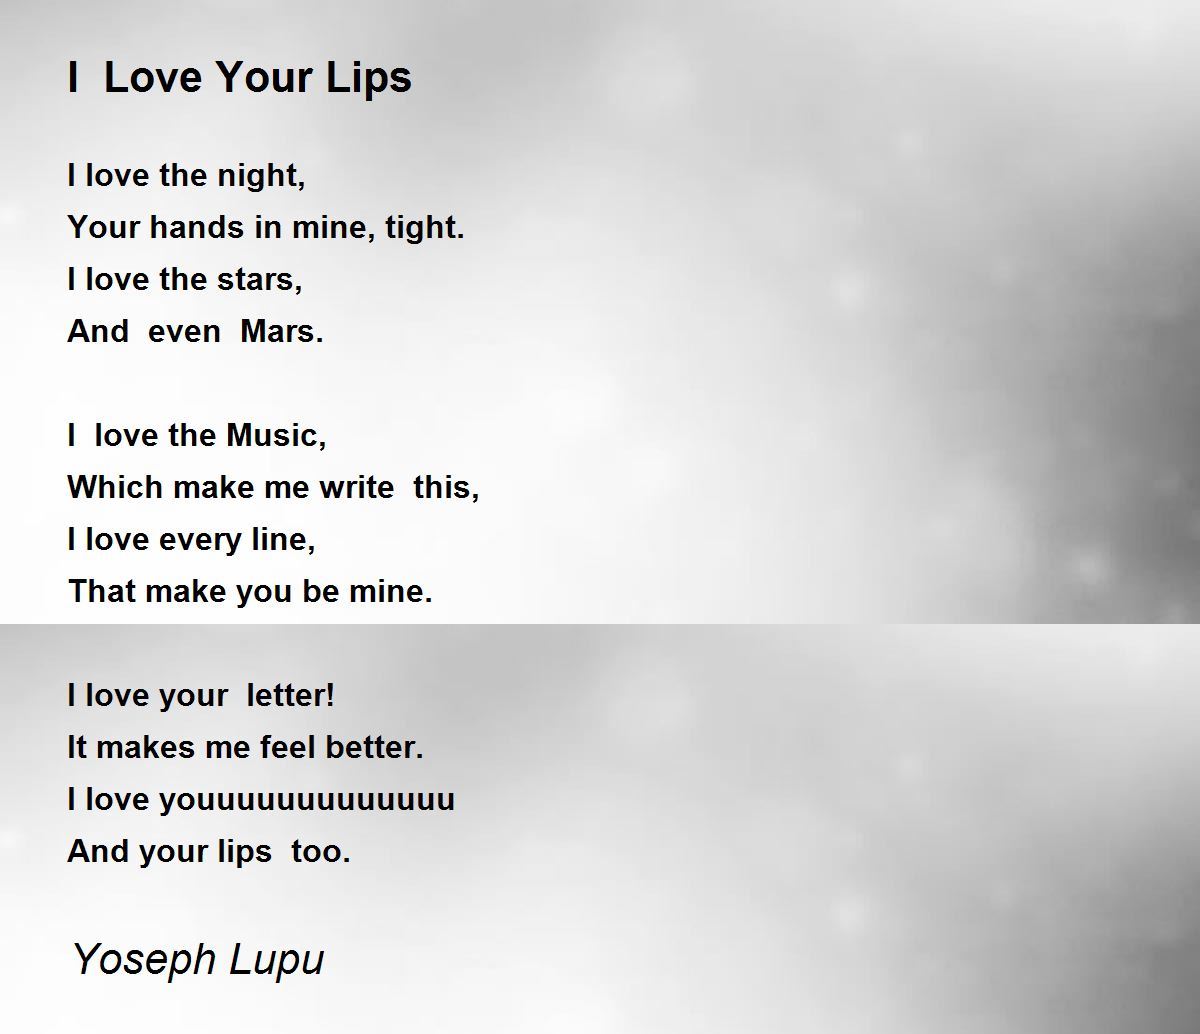 LV My Lips